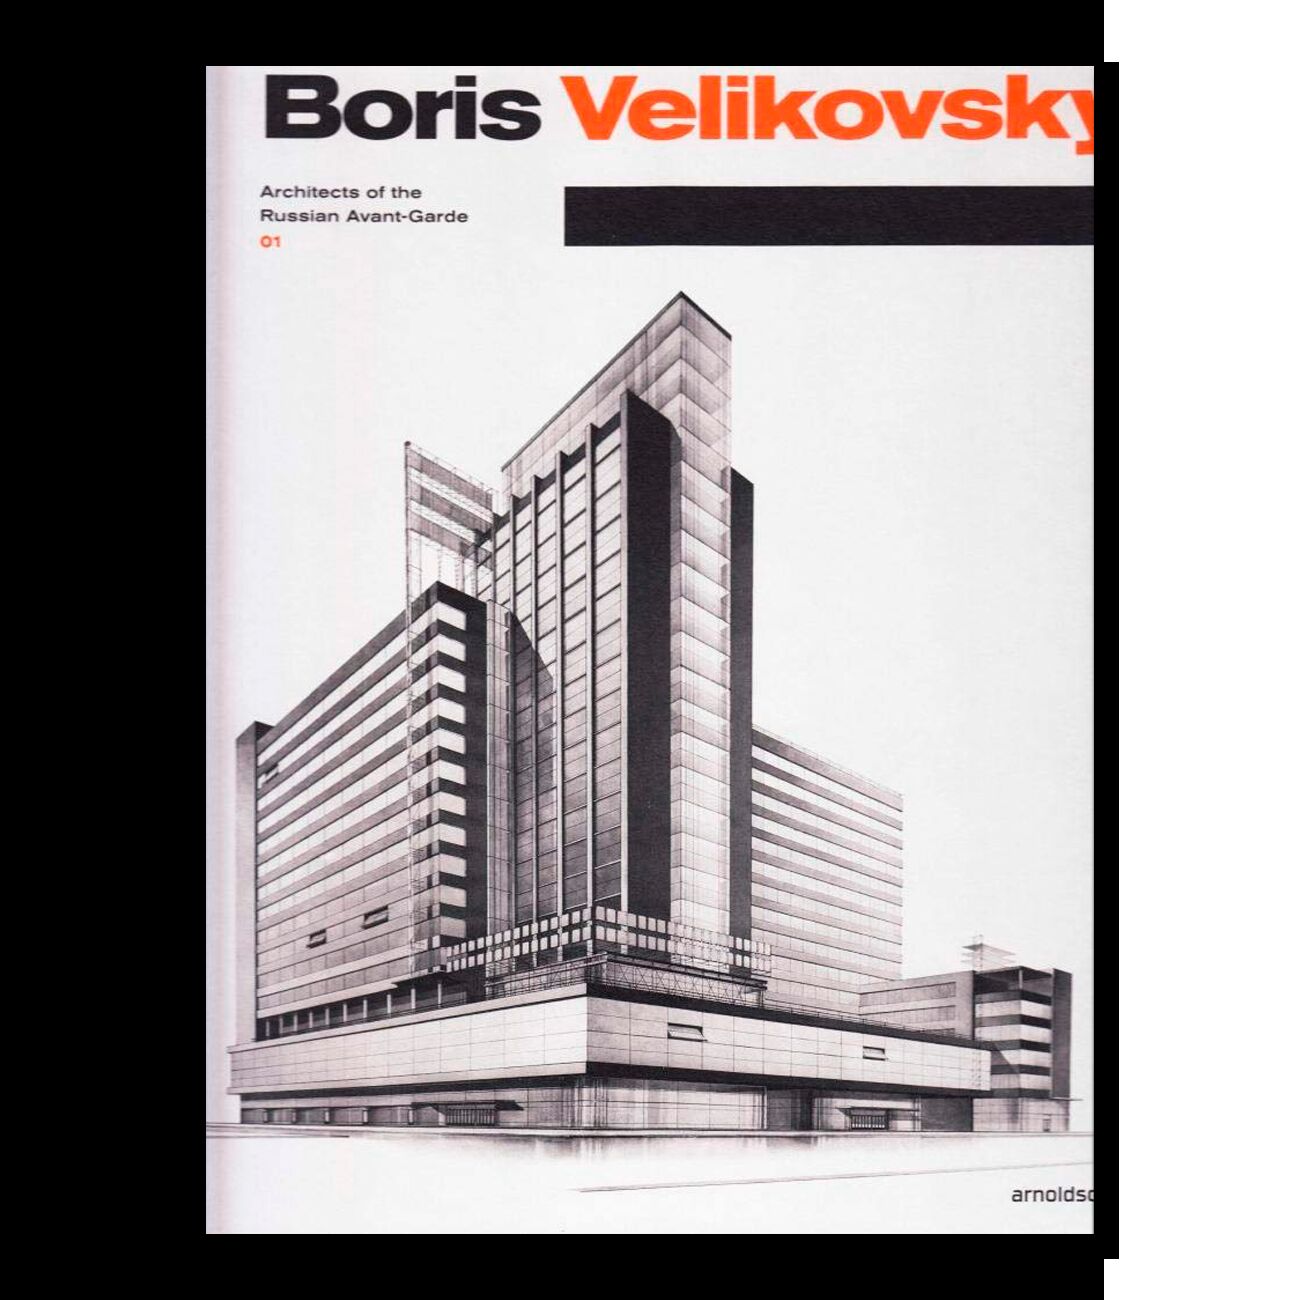 Boris Velikovsky: Architects of the Russian Avant-Garde